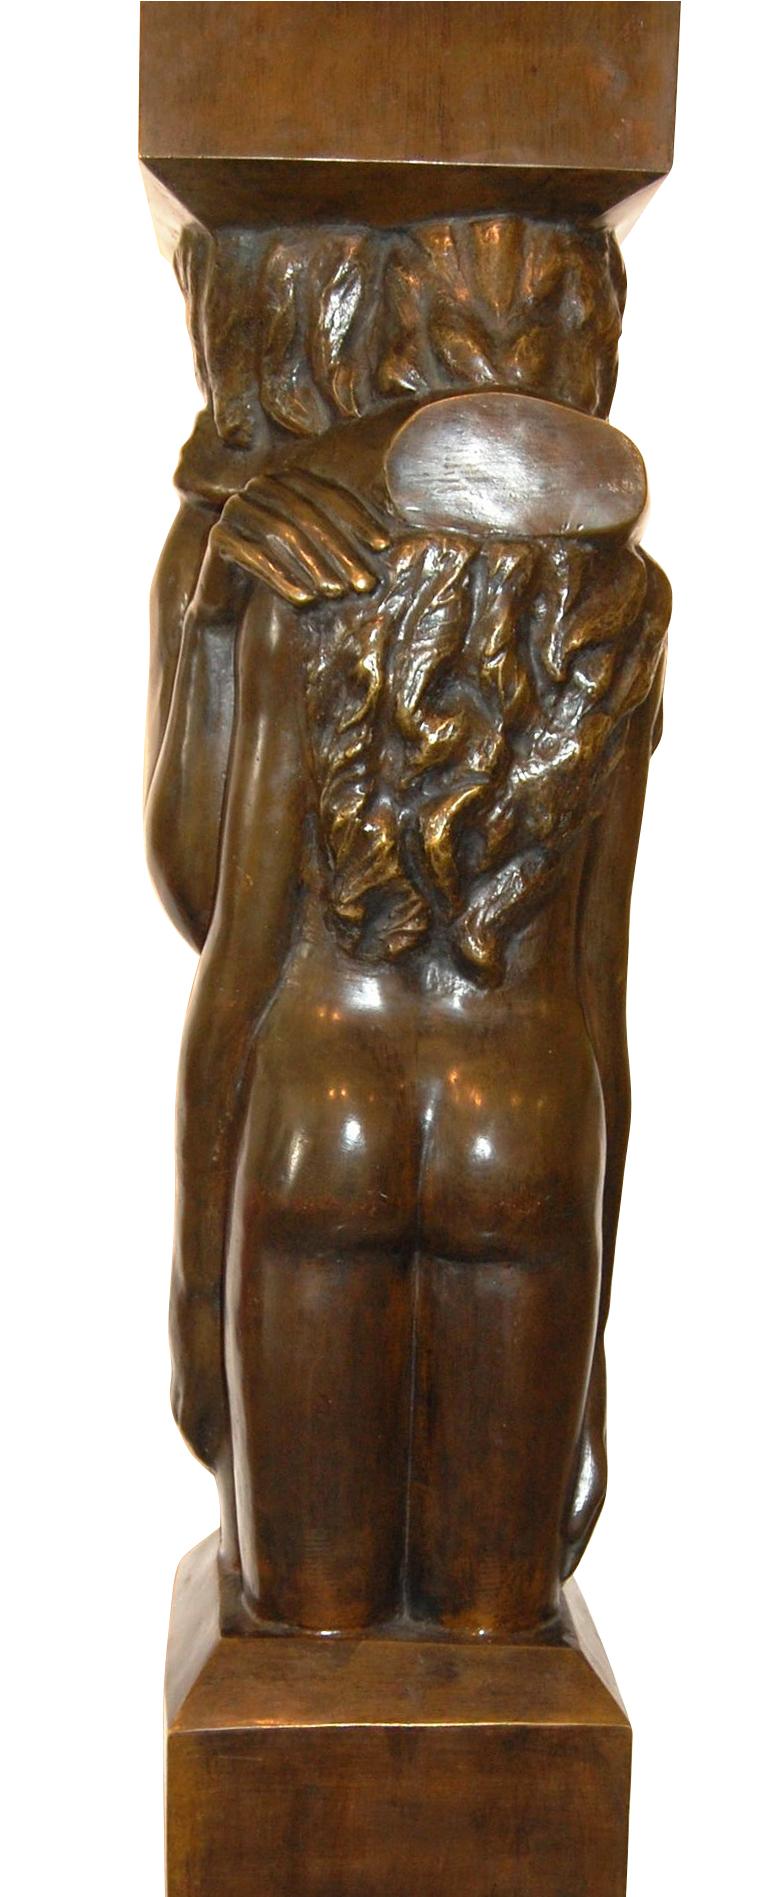  Grande sculpture éternelle en bronze - Moderne Sculpture par Victor Salmones